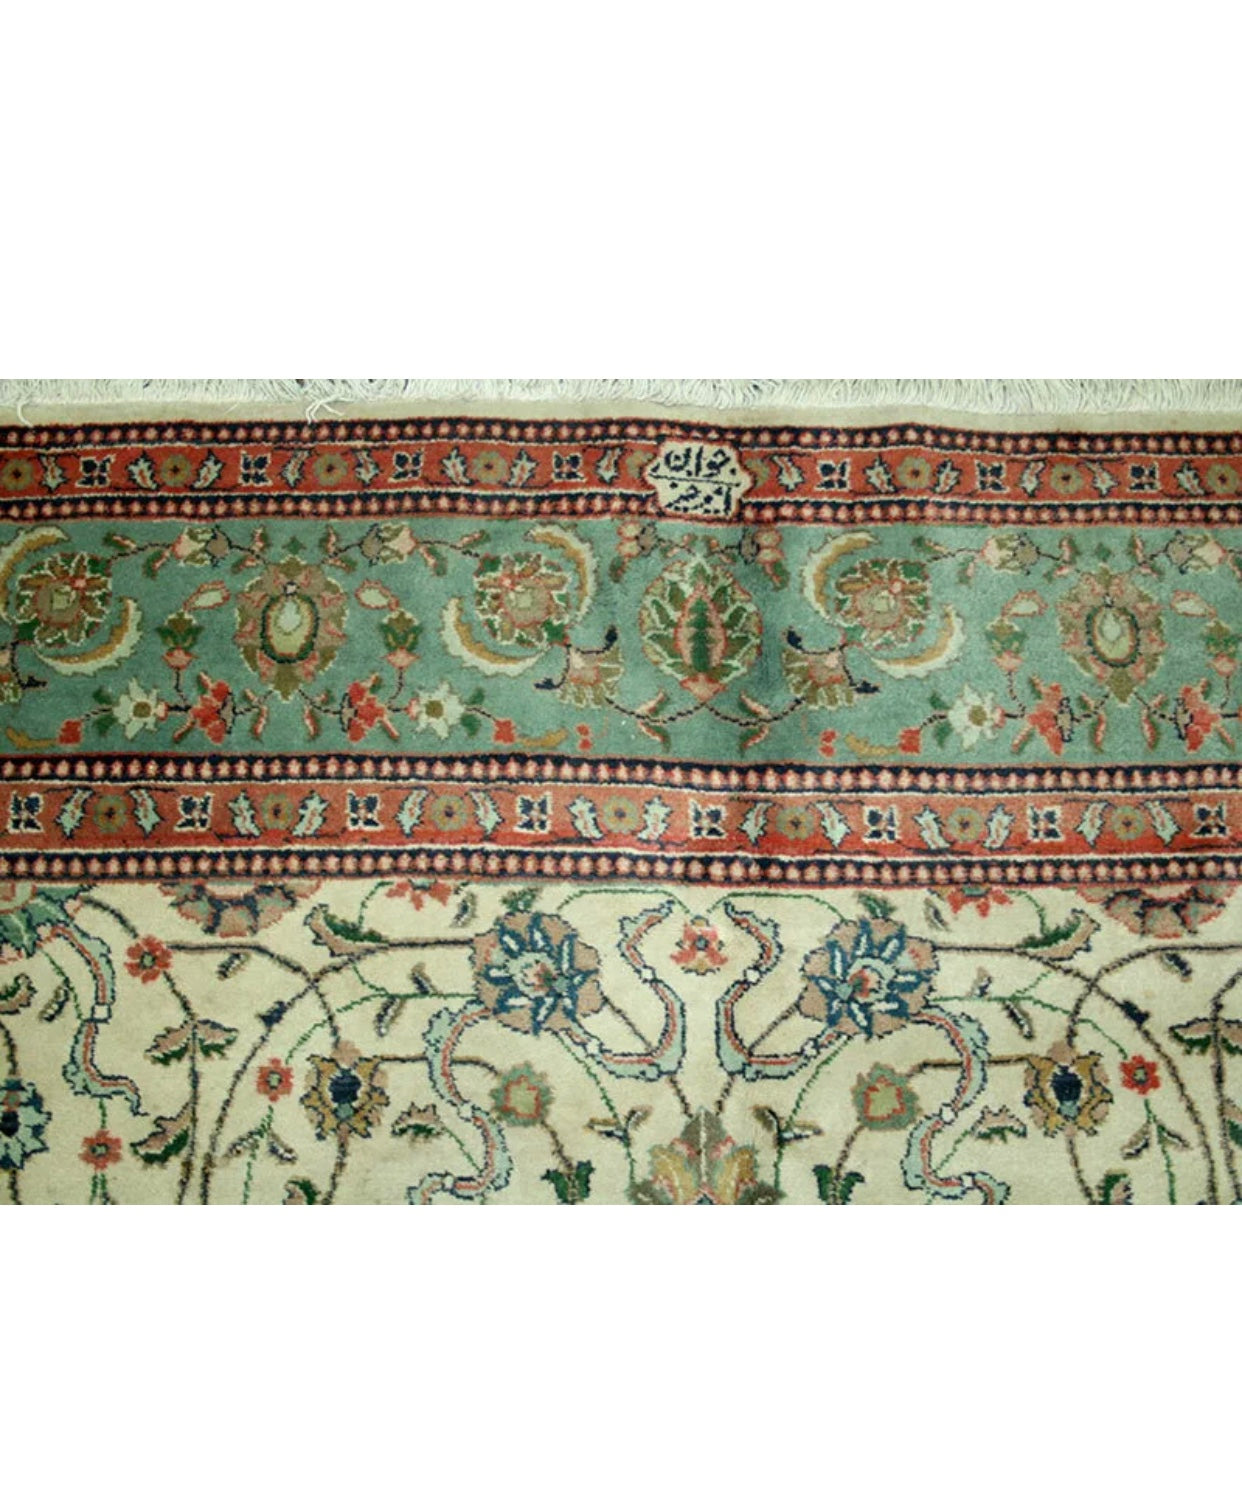 A Superb Antique Signed Persian Tabriz Rug